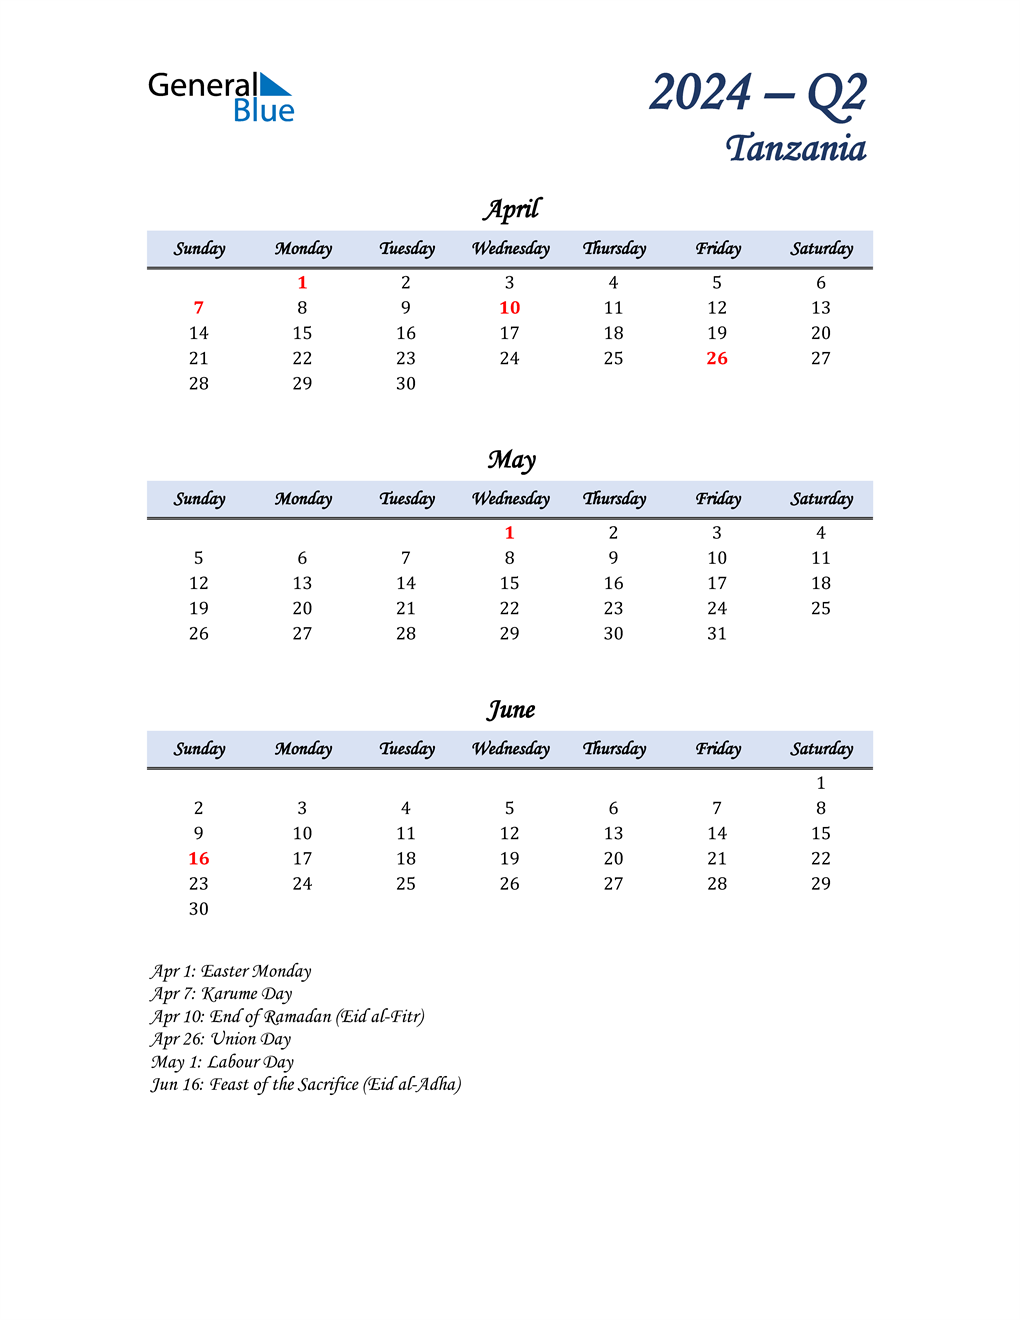  April, May, and June Calendar for Tanzania